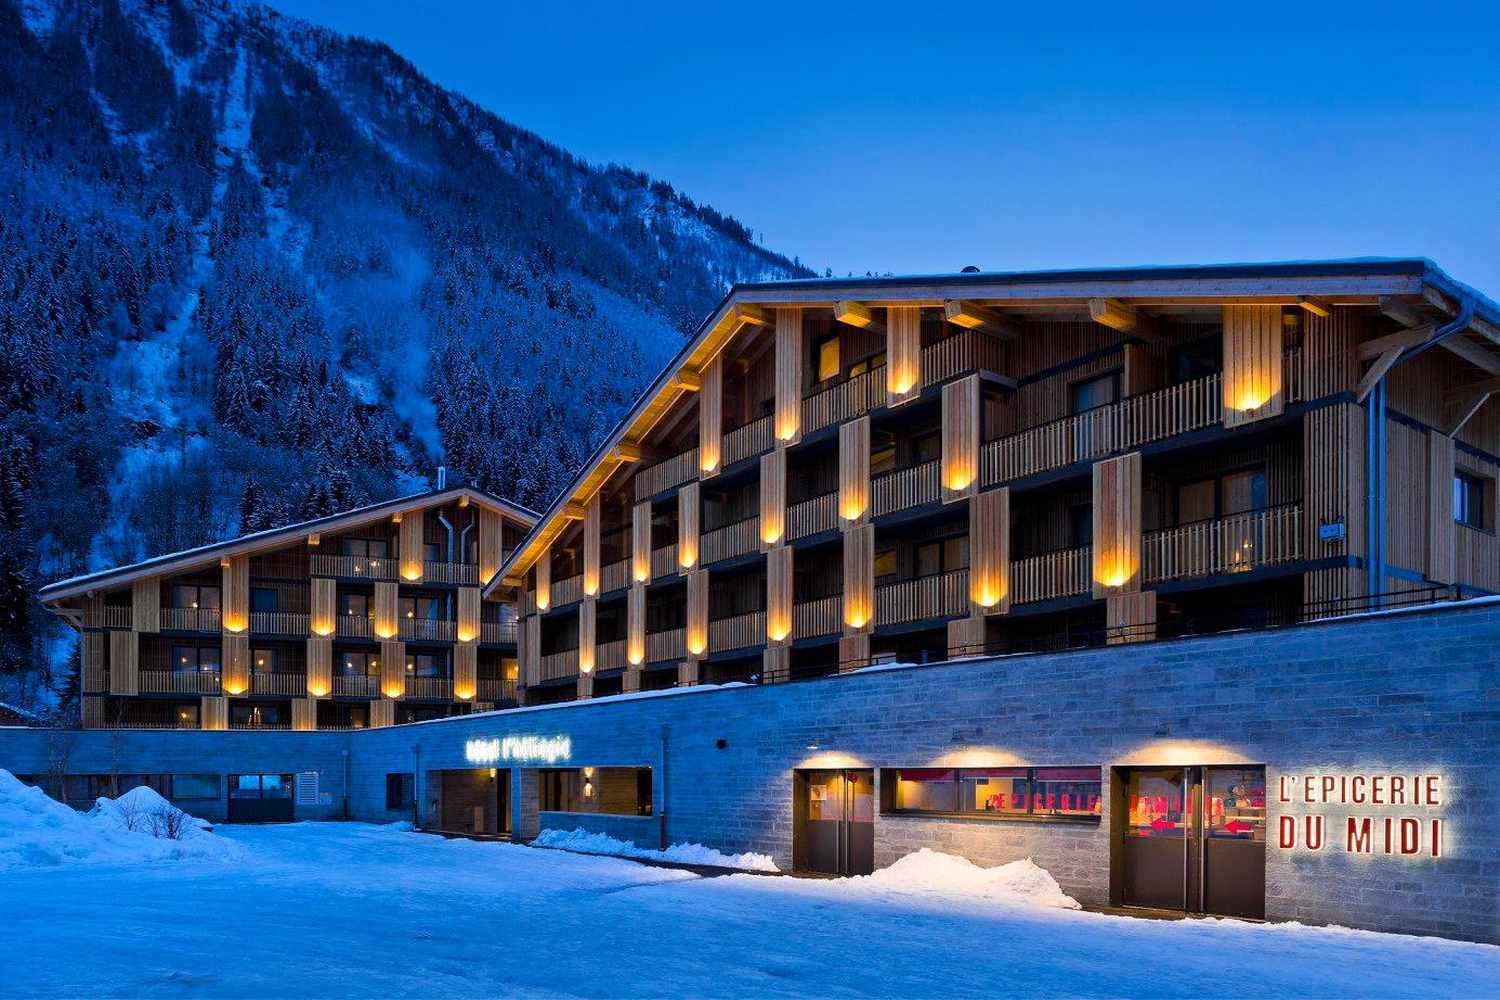 Heliopic Hotel & Spa Chamonix, Rhone Alpes - France